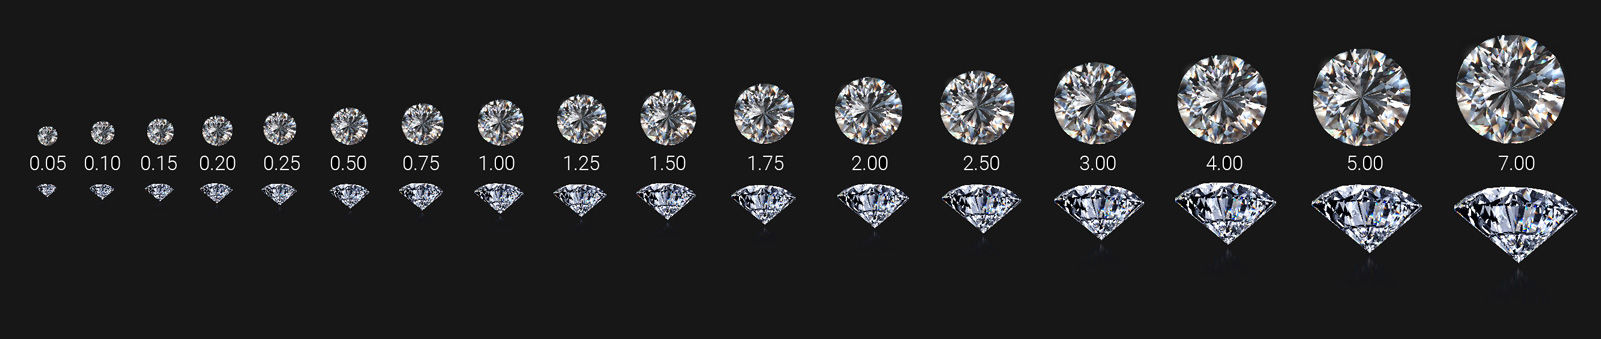 vaha-diamantu-80-1600